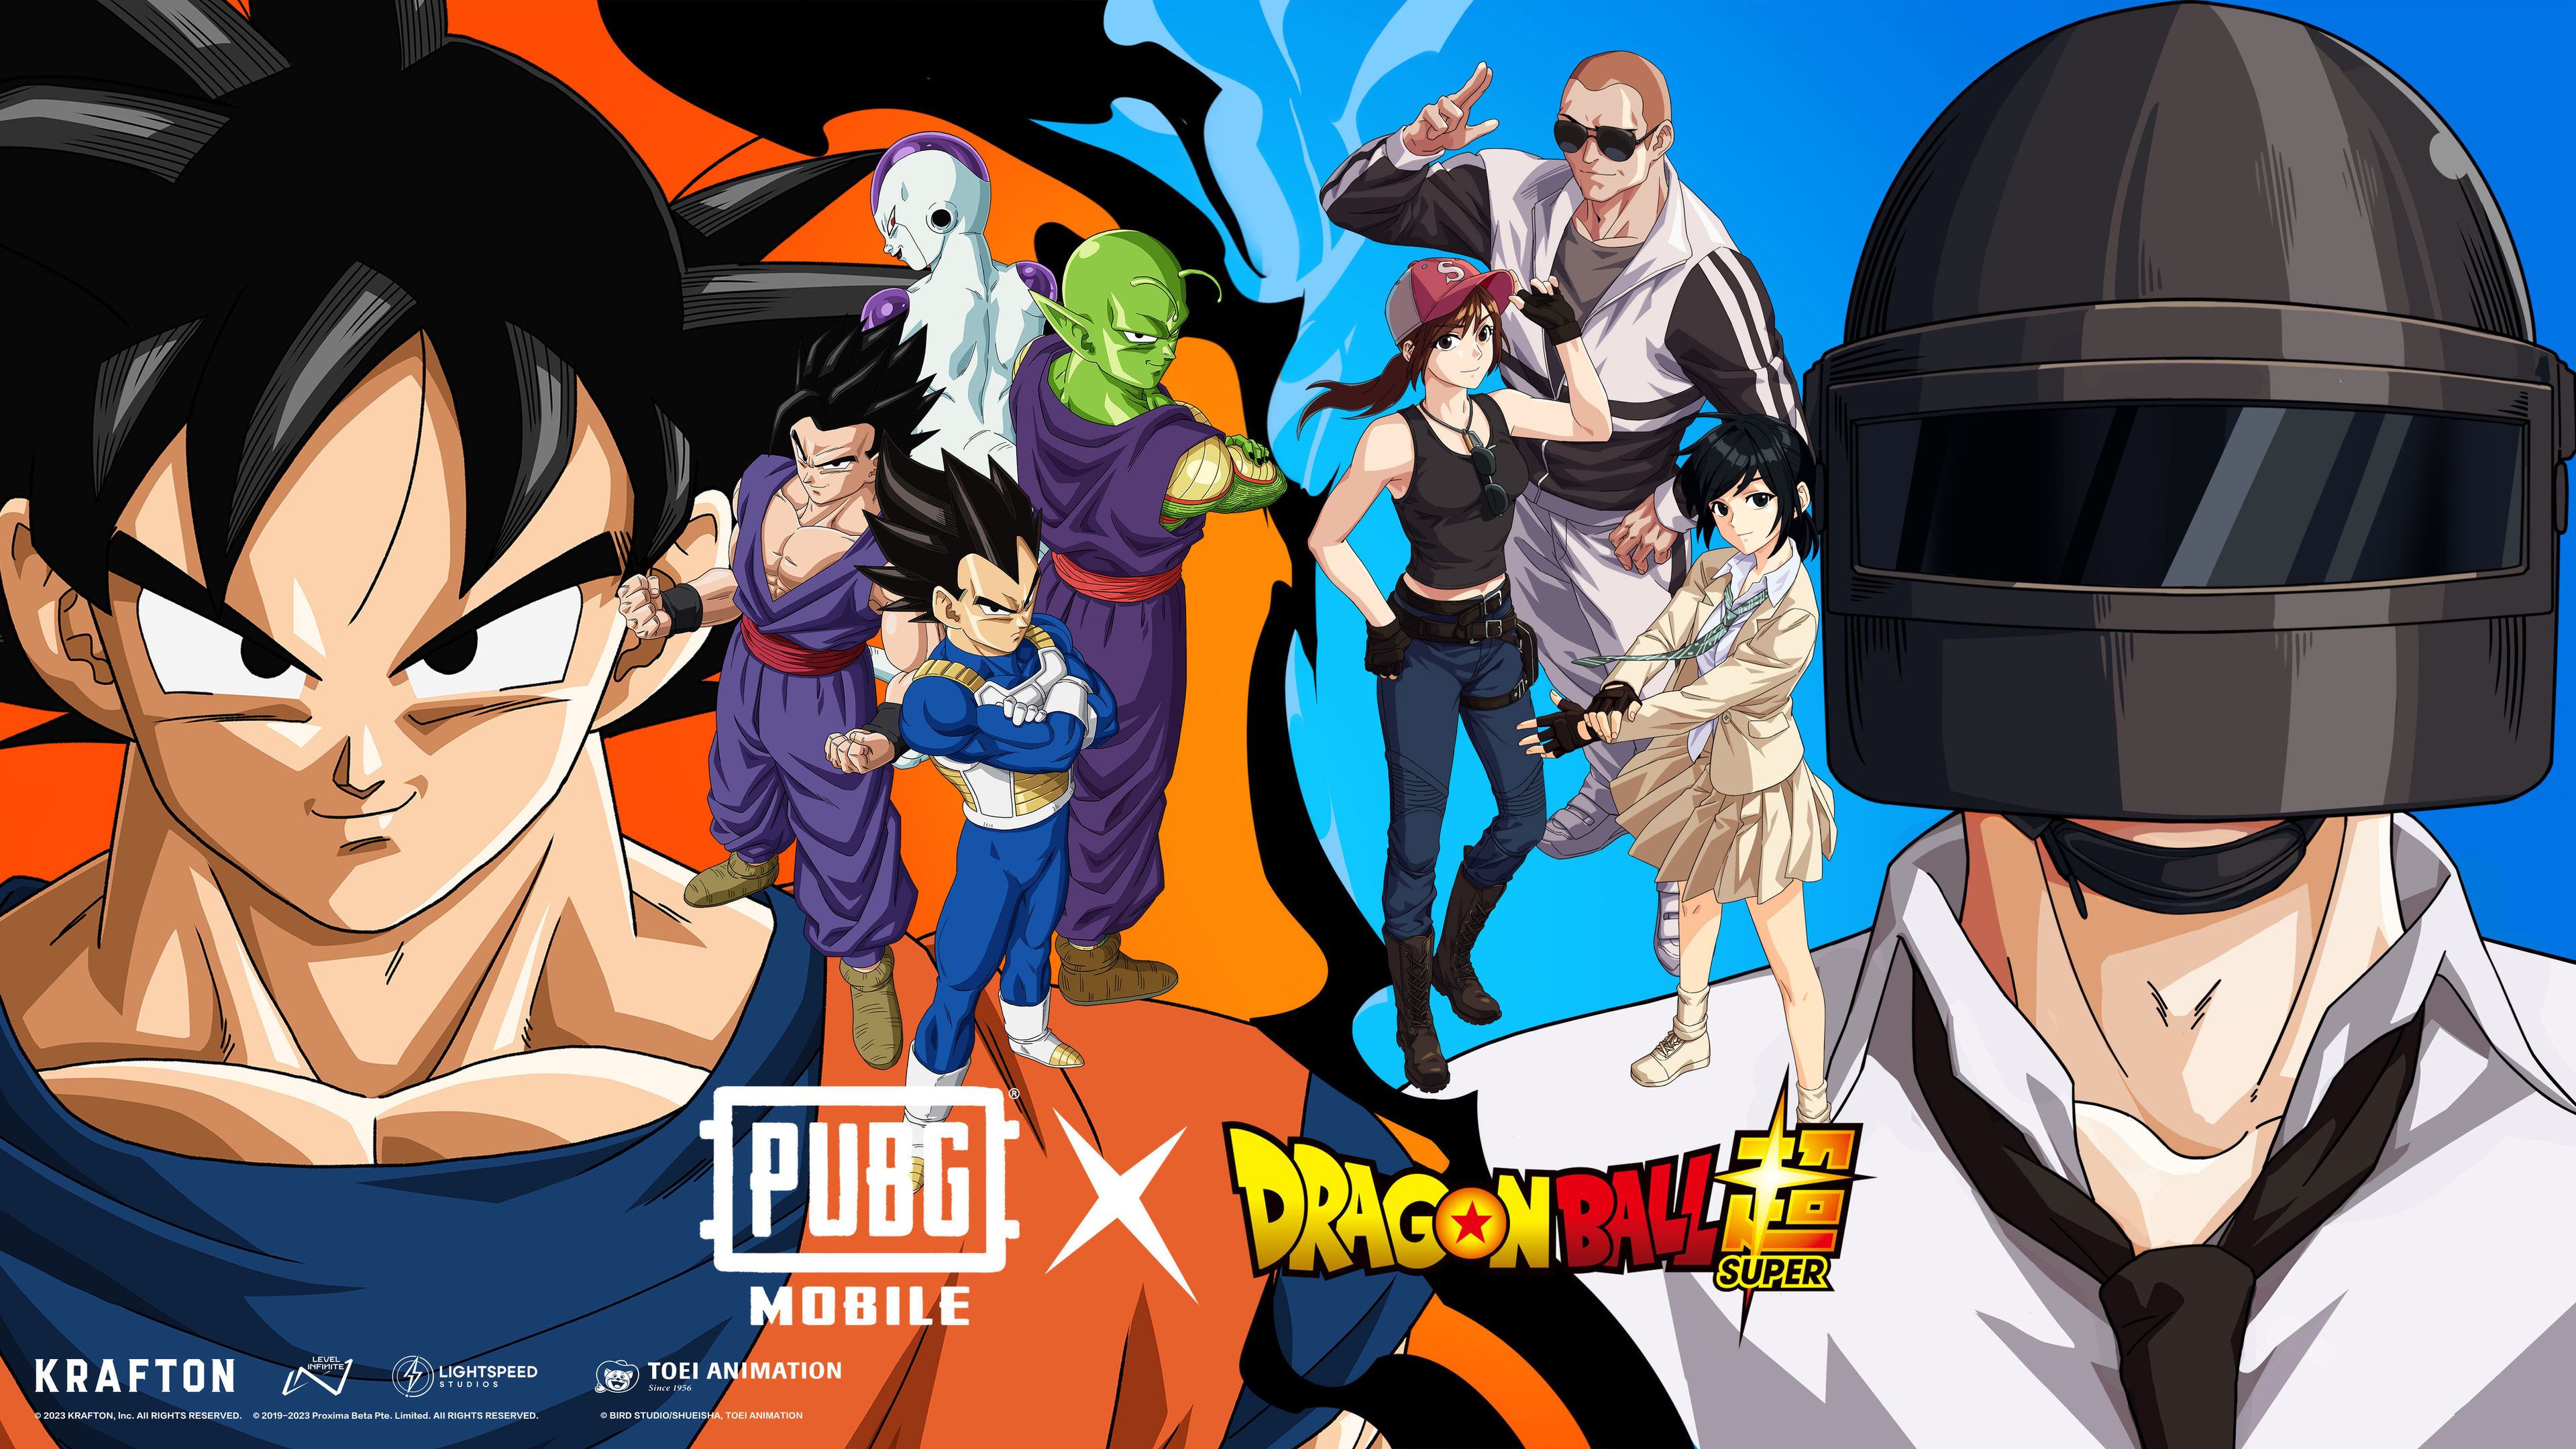 Dragon Ball x PUBG